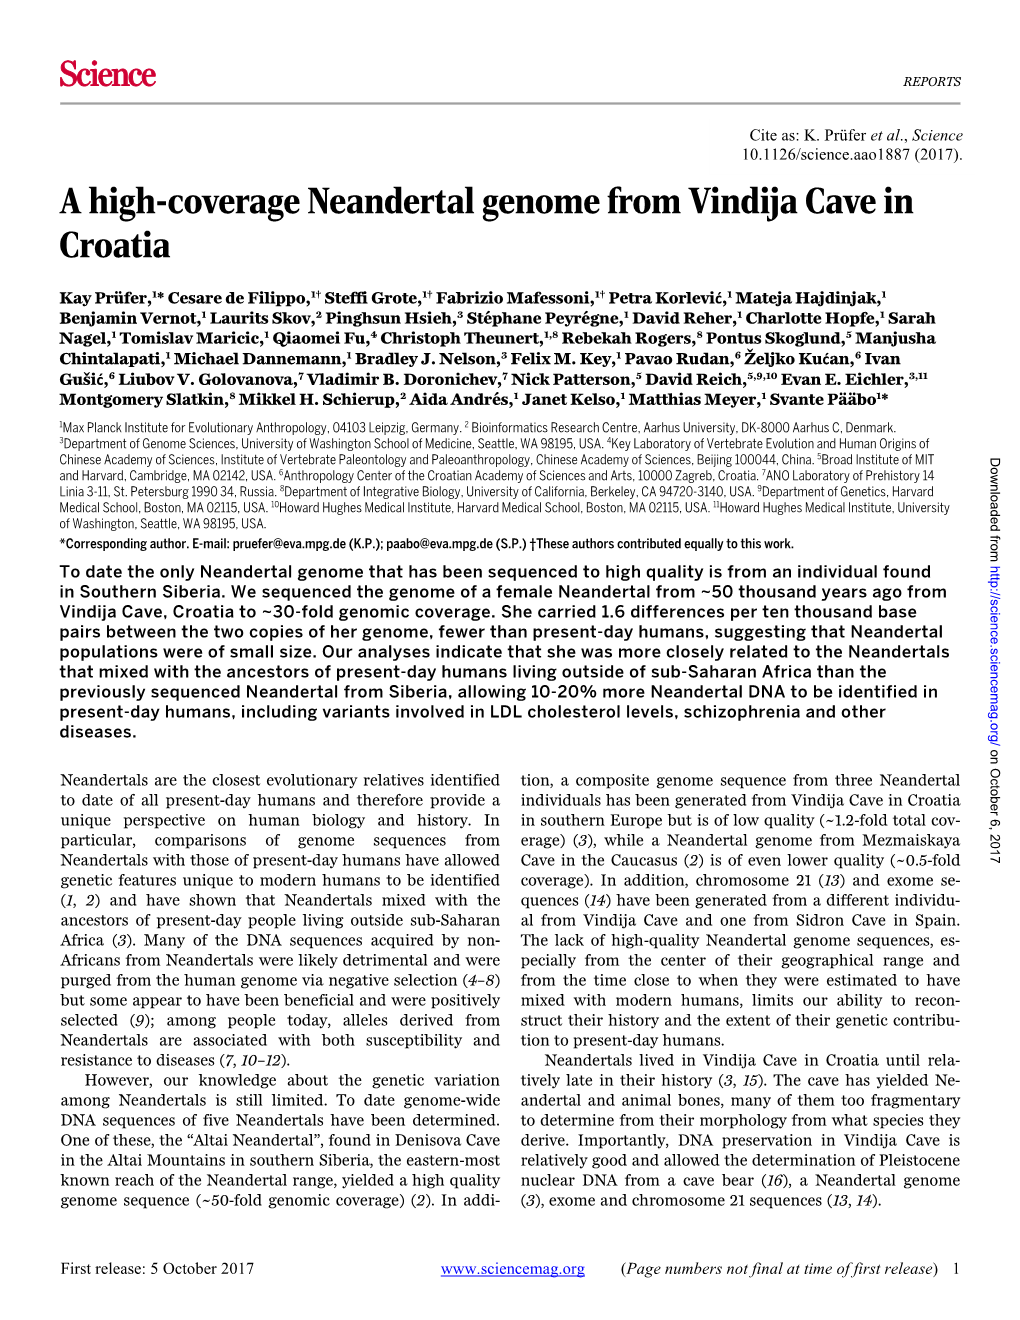 A High-Coverage Neandertal Genome from Vindija Cave in Croatia